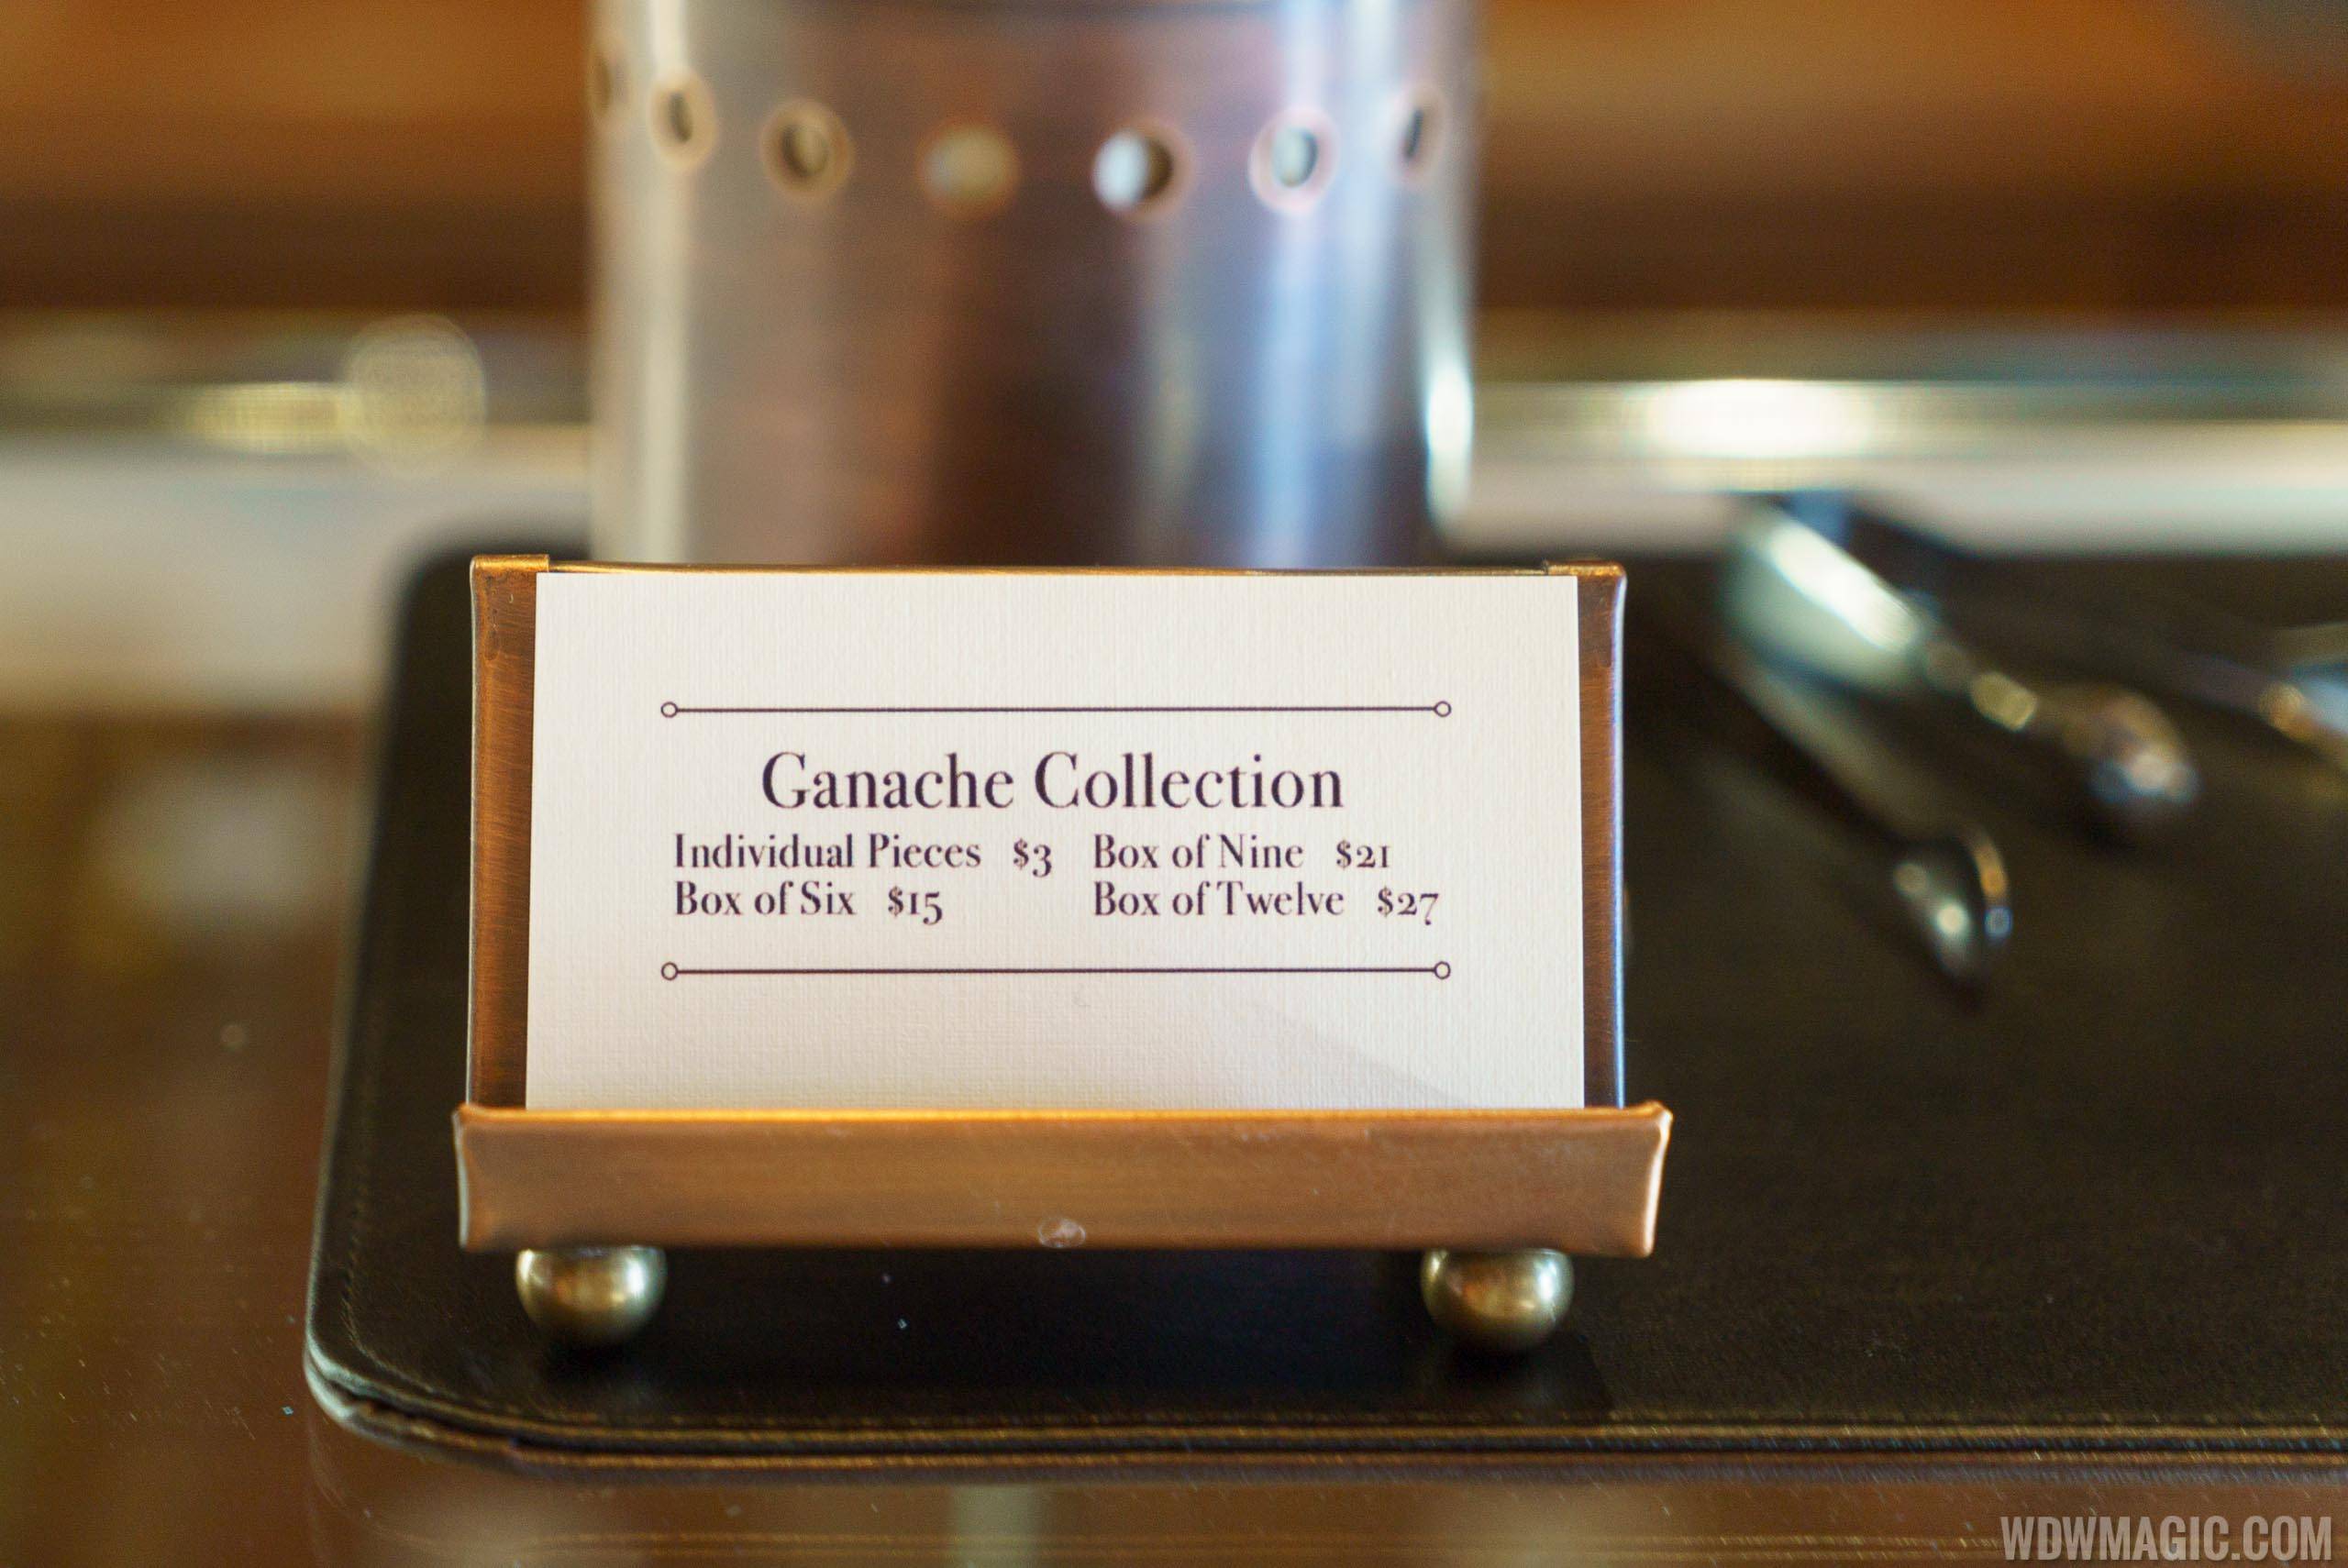 The Ganachery - Ganache Collection pricing